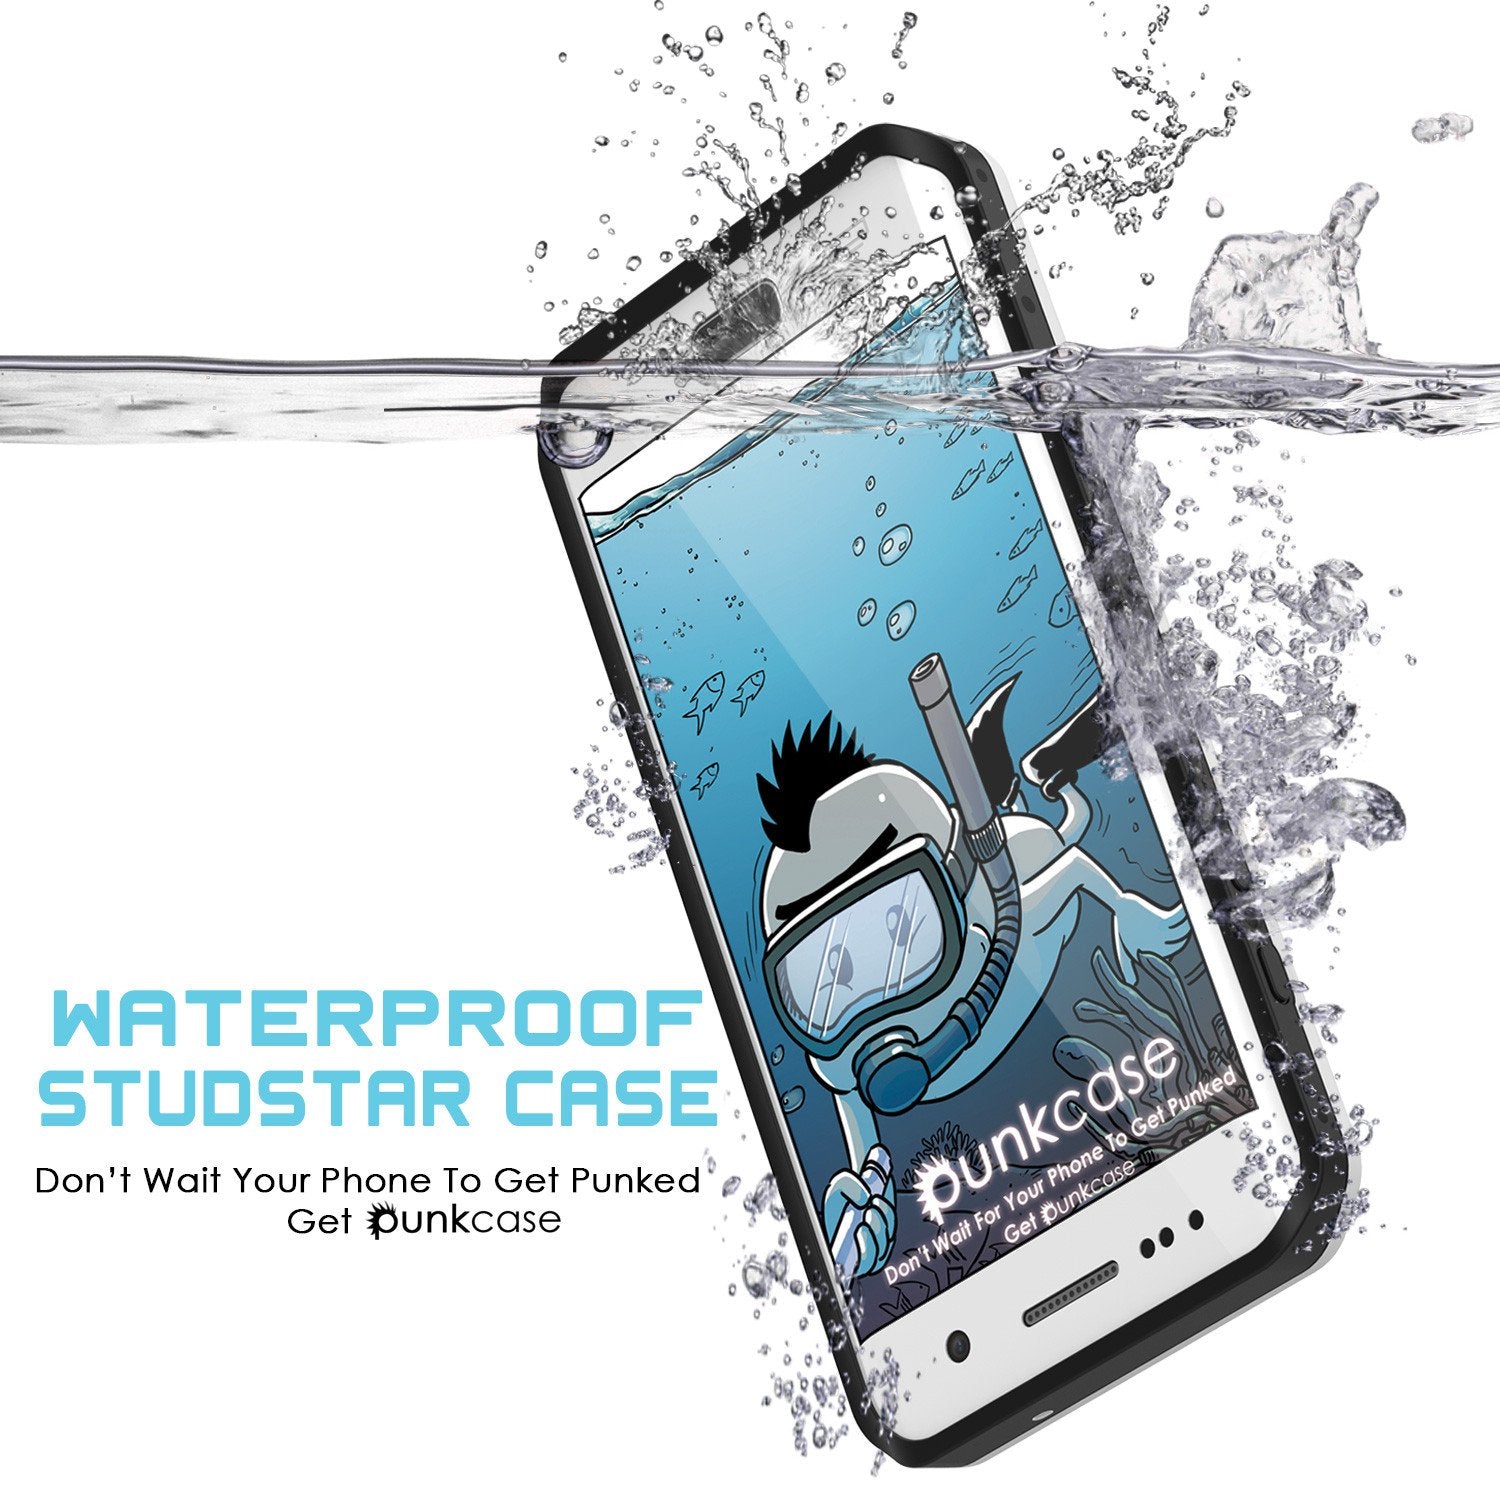 Galaxy S7 EDGE Waterproof Case Punkcase StudStar White Thin 6.6ft Underwater IP68 Shock/Snow Proof